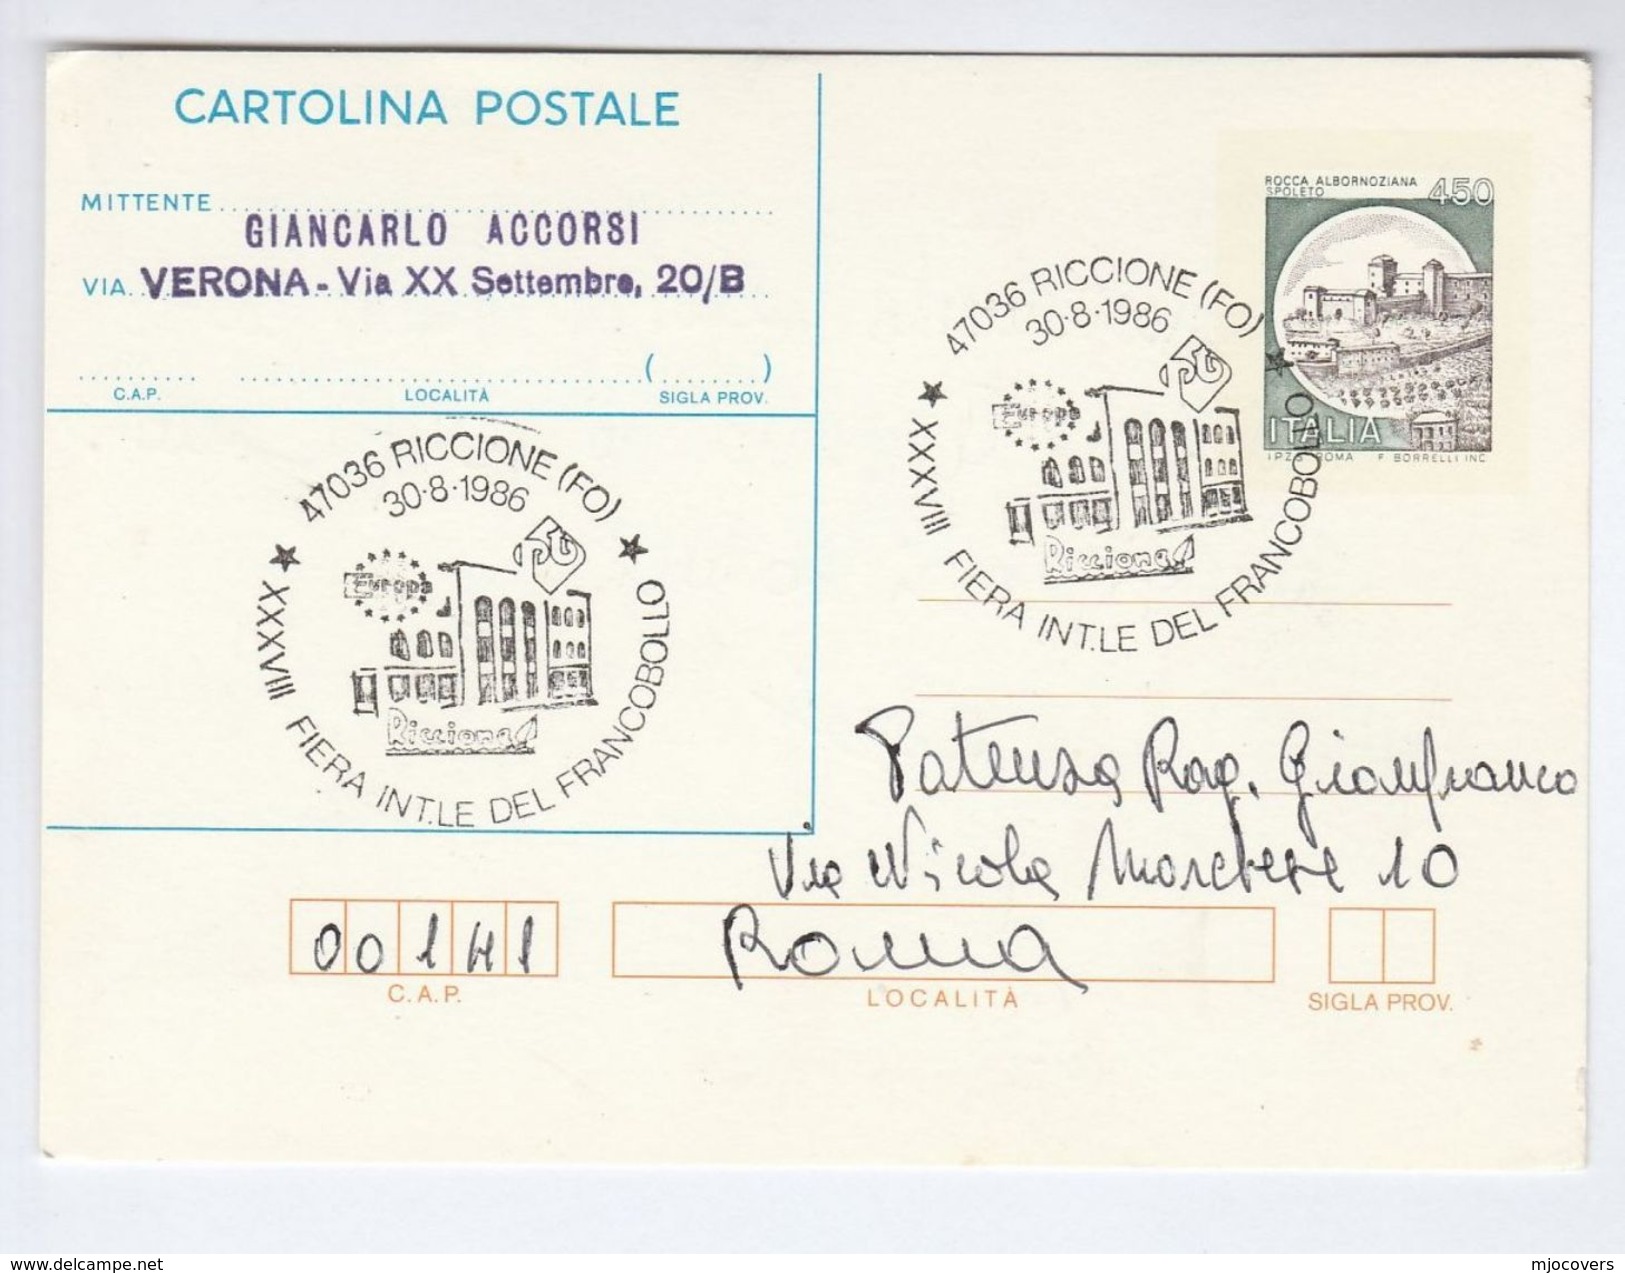 1986 RICCIONE International STAMP FAIR EVENT COVER Postal Stationery Card Italy Philatelic Exhibition Europa Castle - Entero Postal